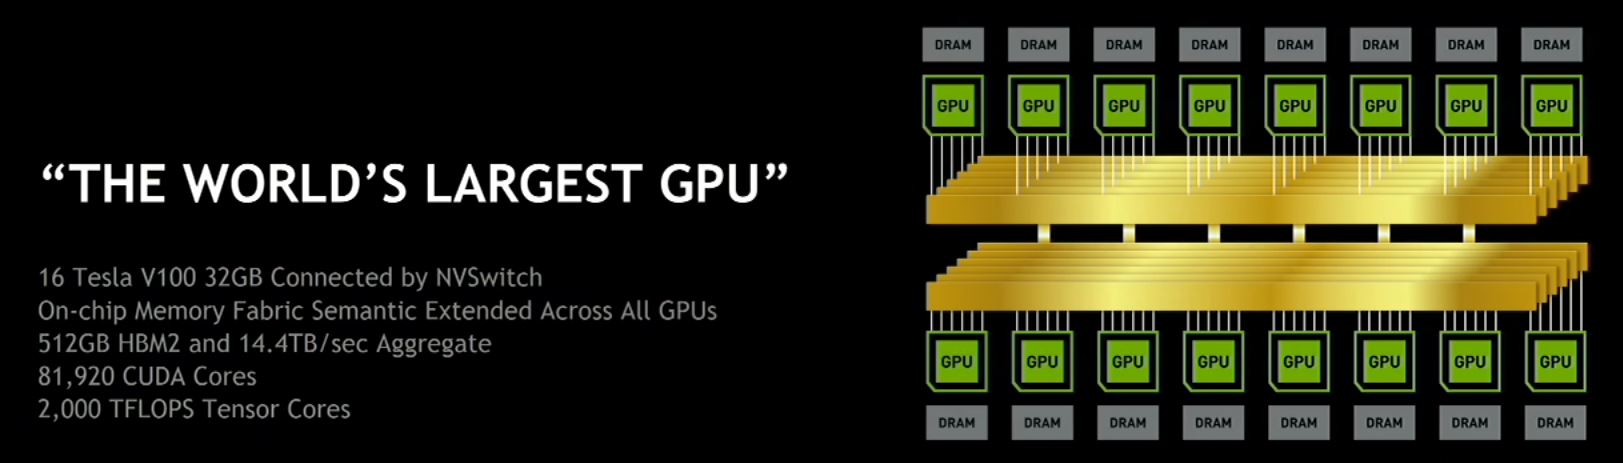 NVIDIA announces largest GPU cluster with 81920 CUDA cores | VideoCardz.com